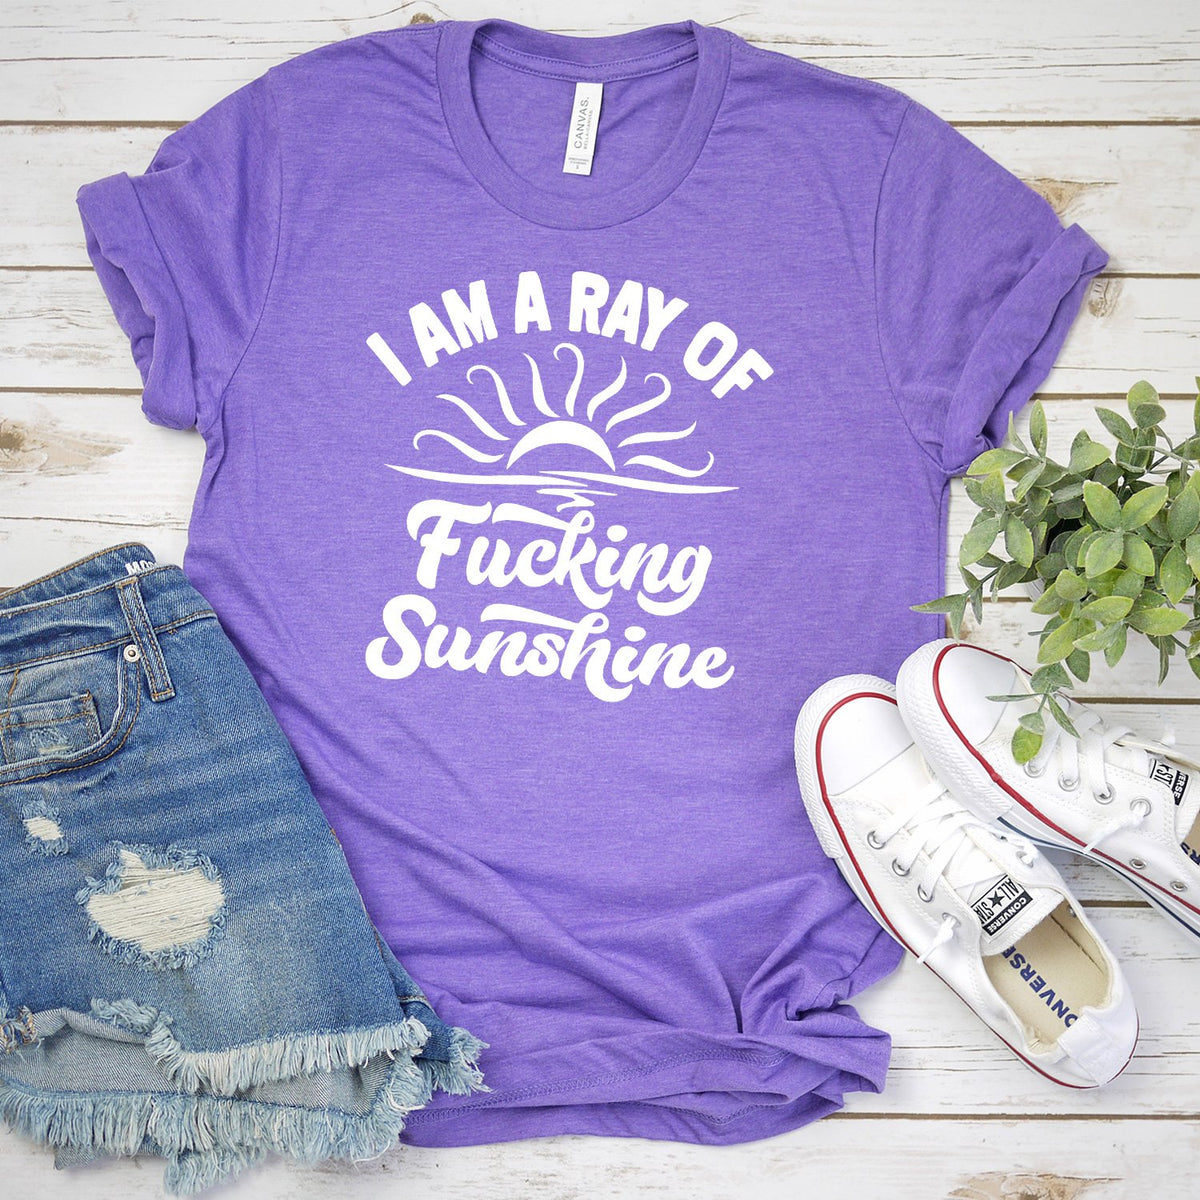 I Am A Ray Of Fucking Sunshine - Short Sleeve Tee Shirt